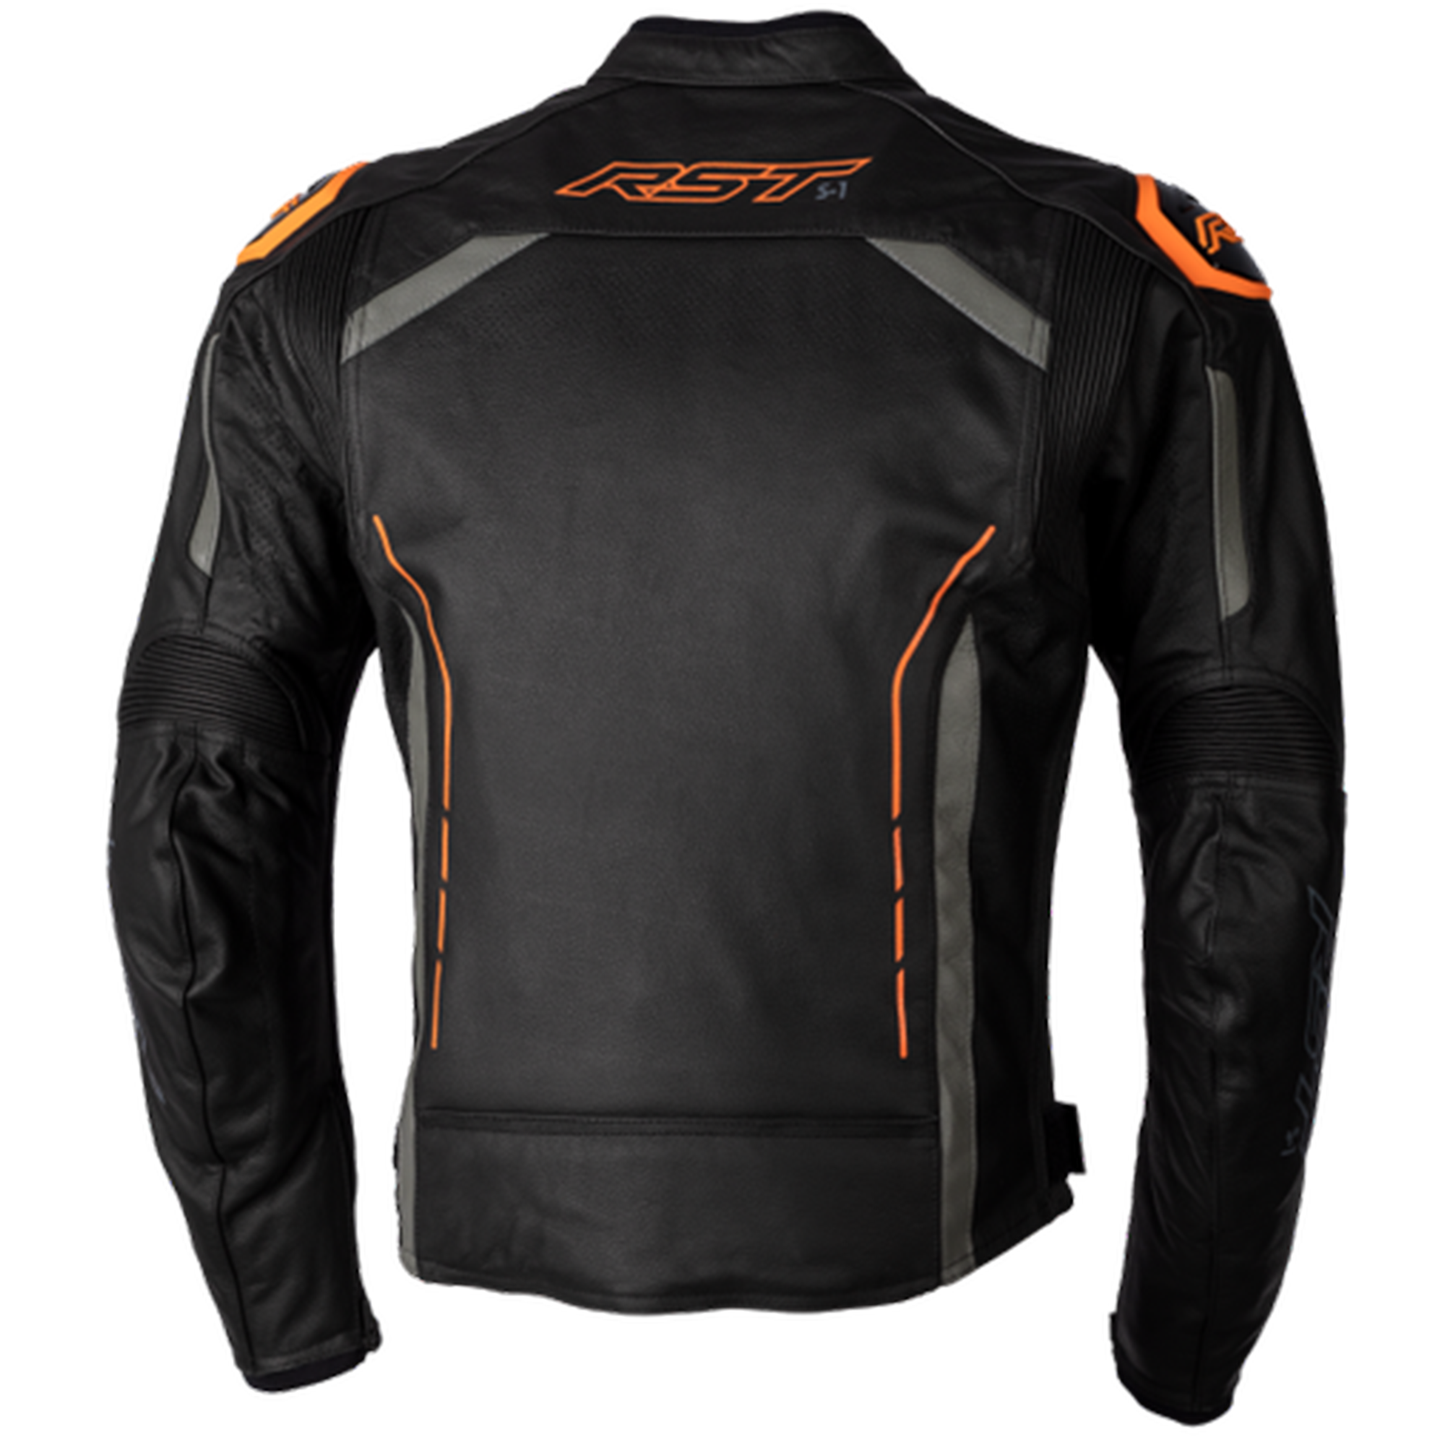 RST S1 (CE) Men's Leather Jacket - Black/Grey/Neon Orange (2977)